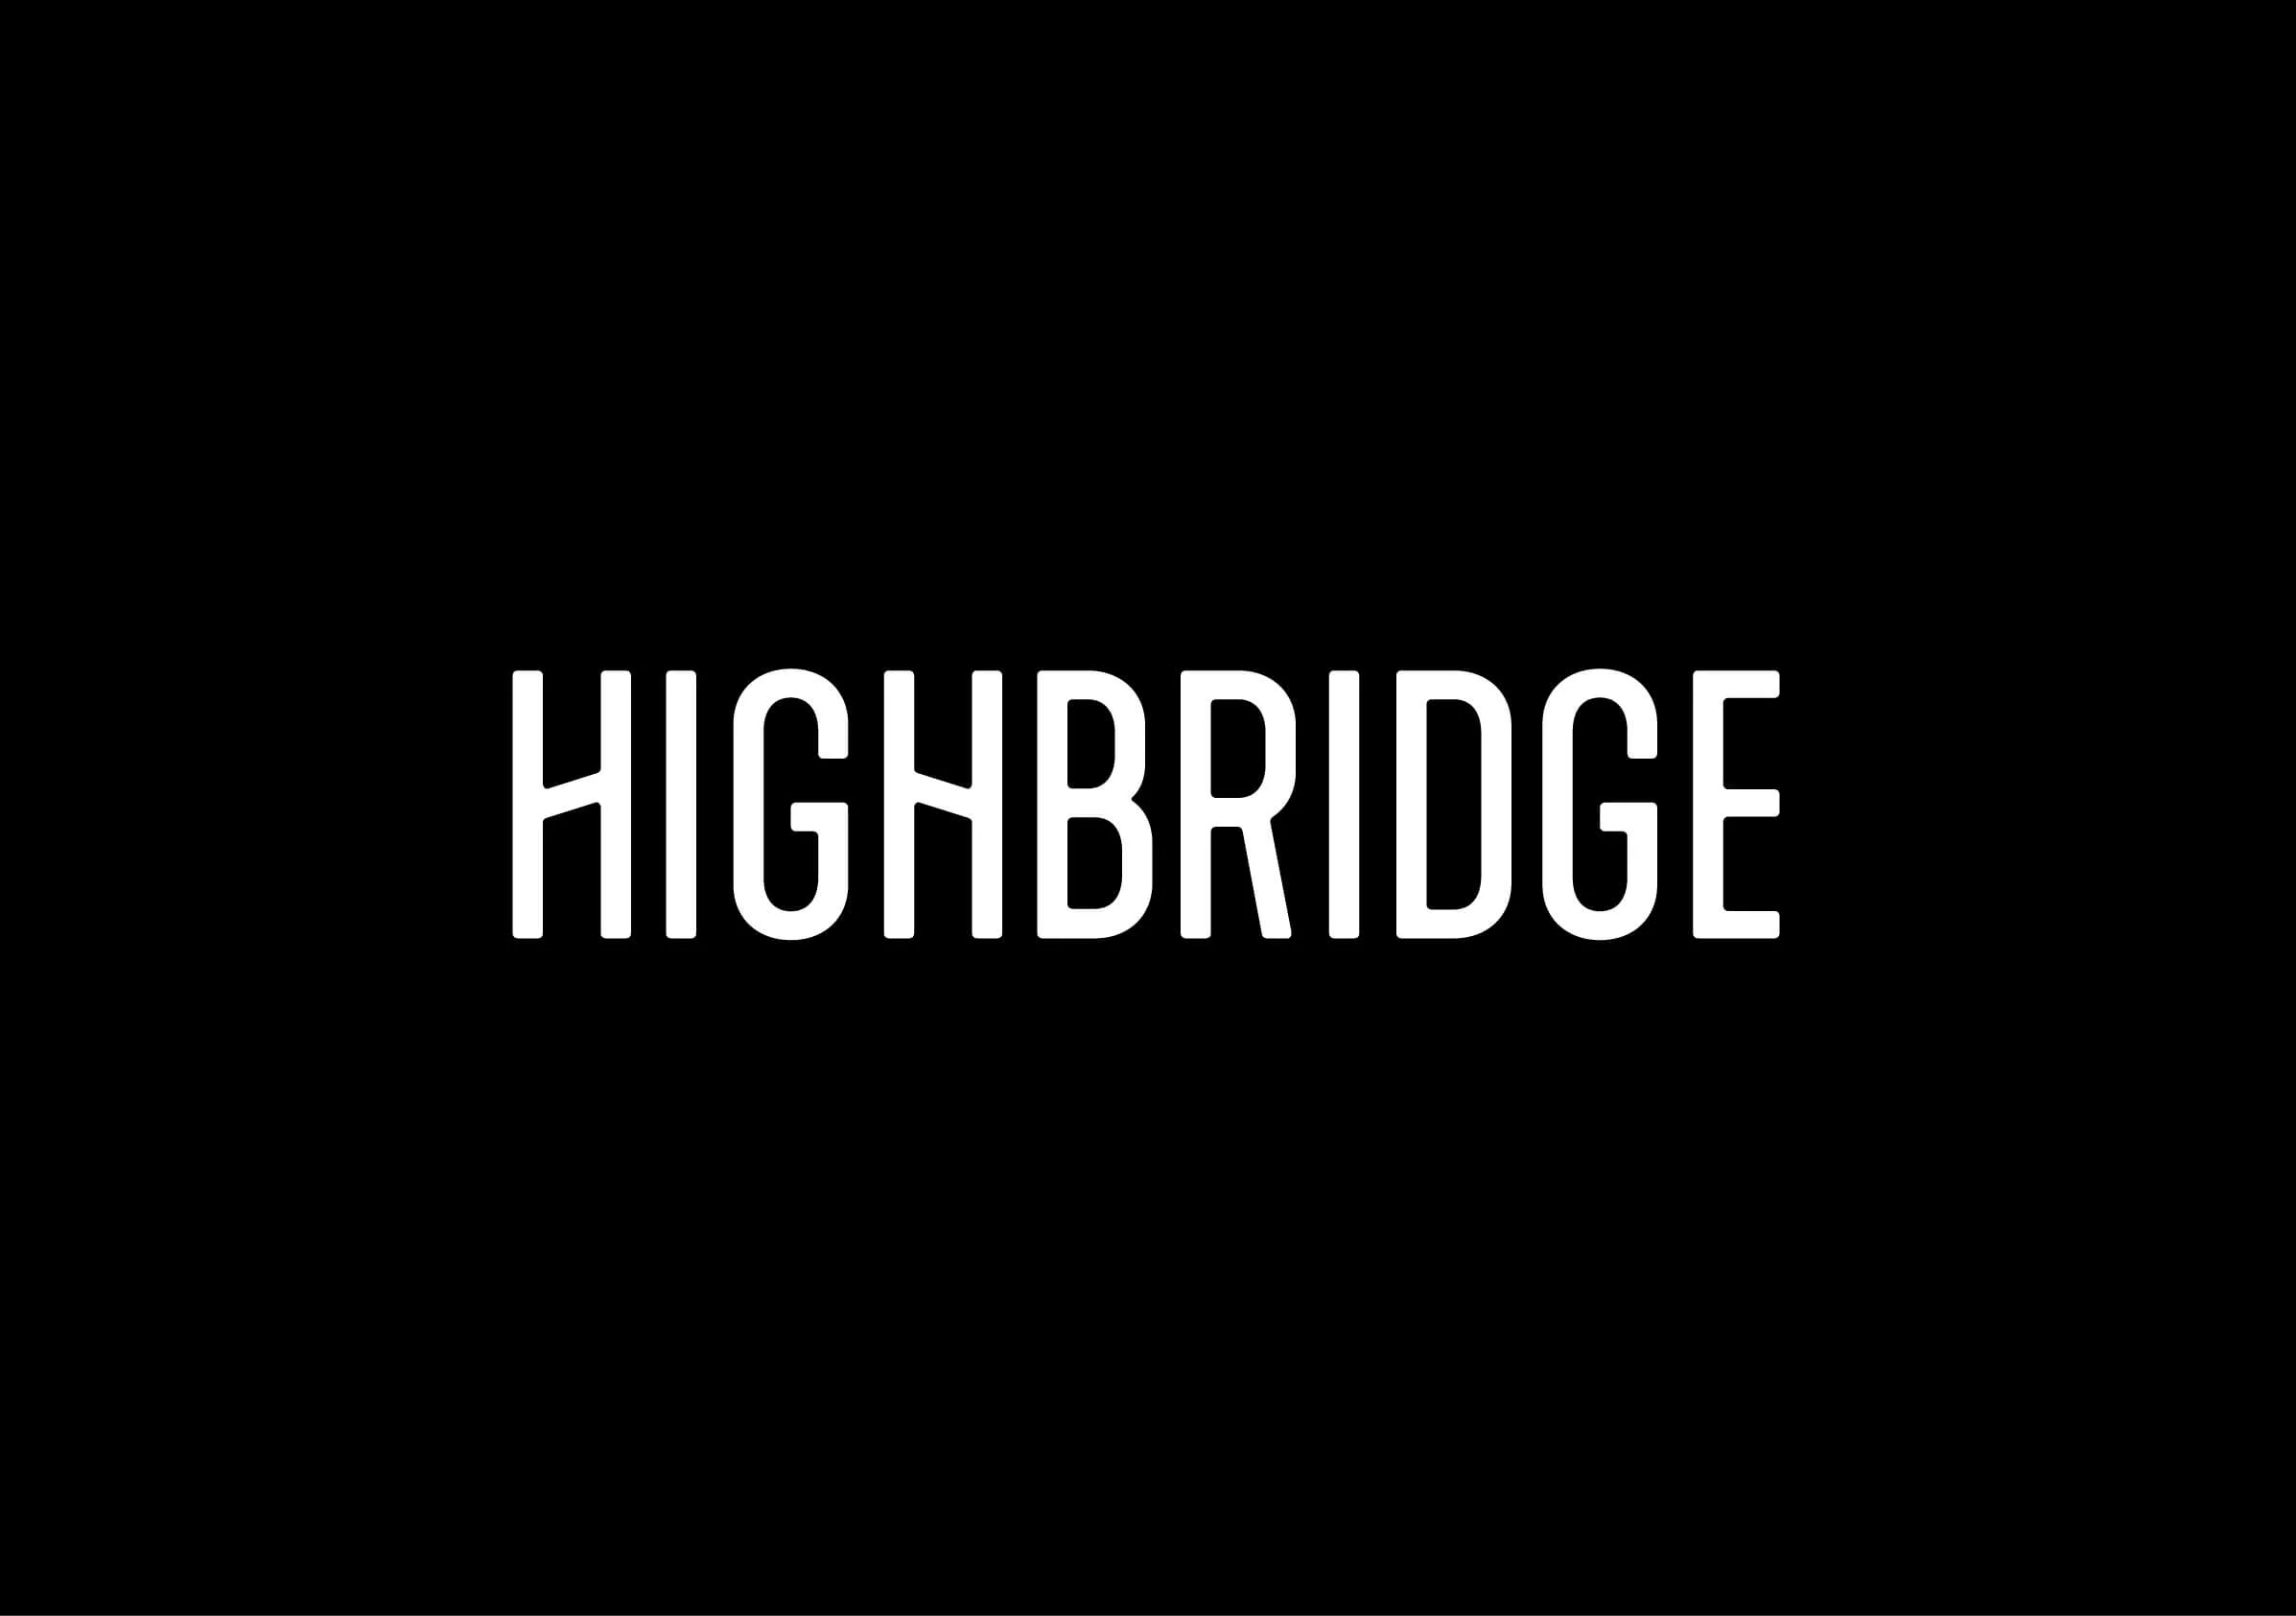 Highbridge Construction logo reversed for Ottawa-based general contractor by graphic designer idApostle